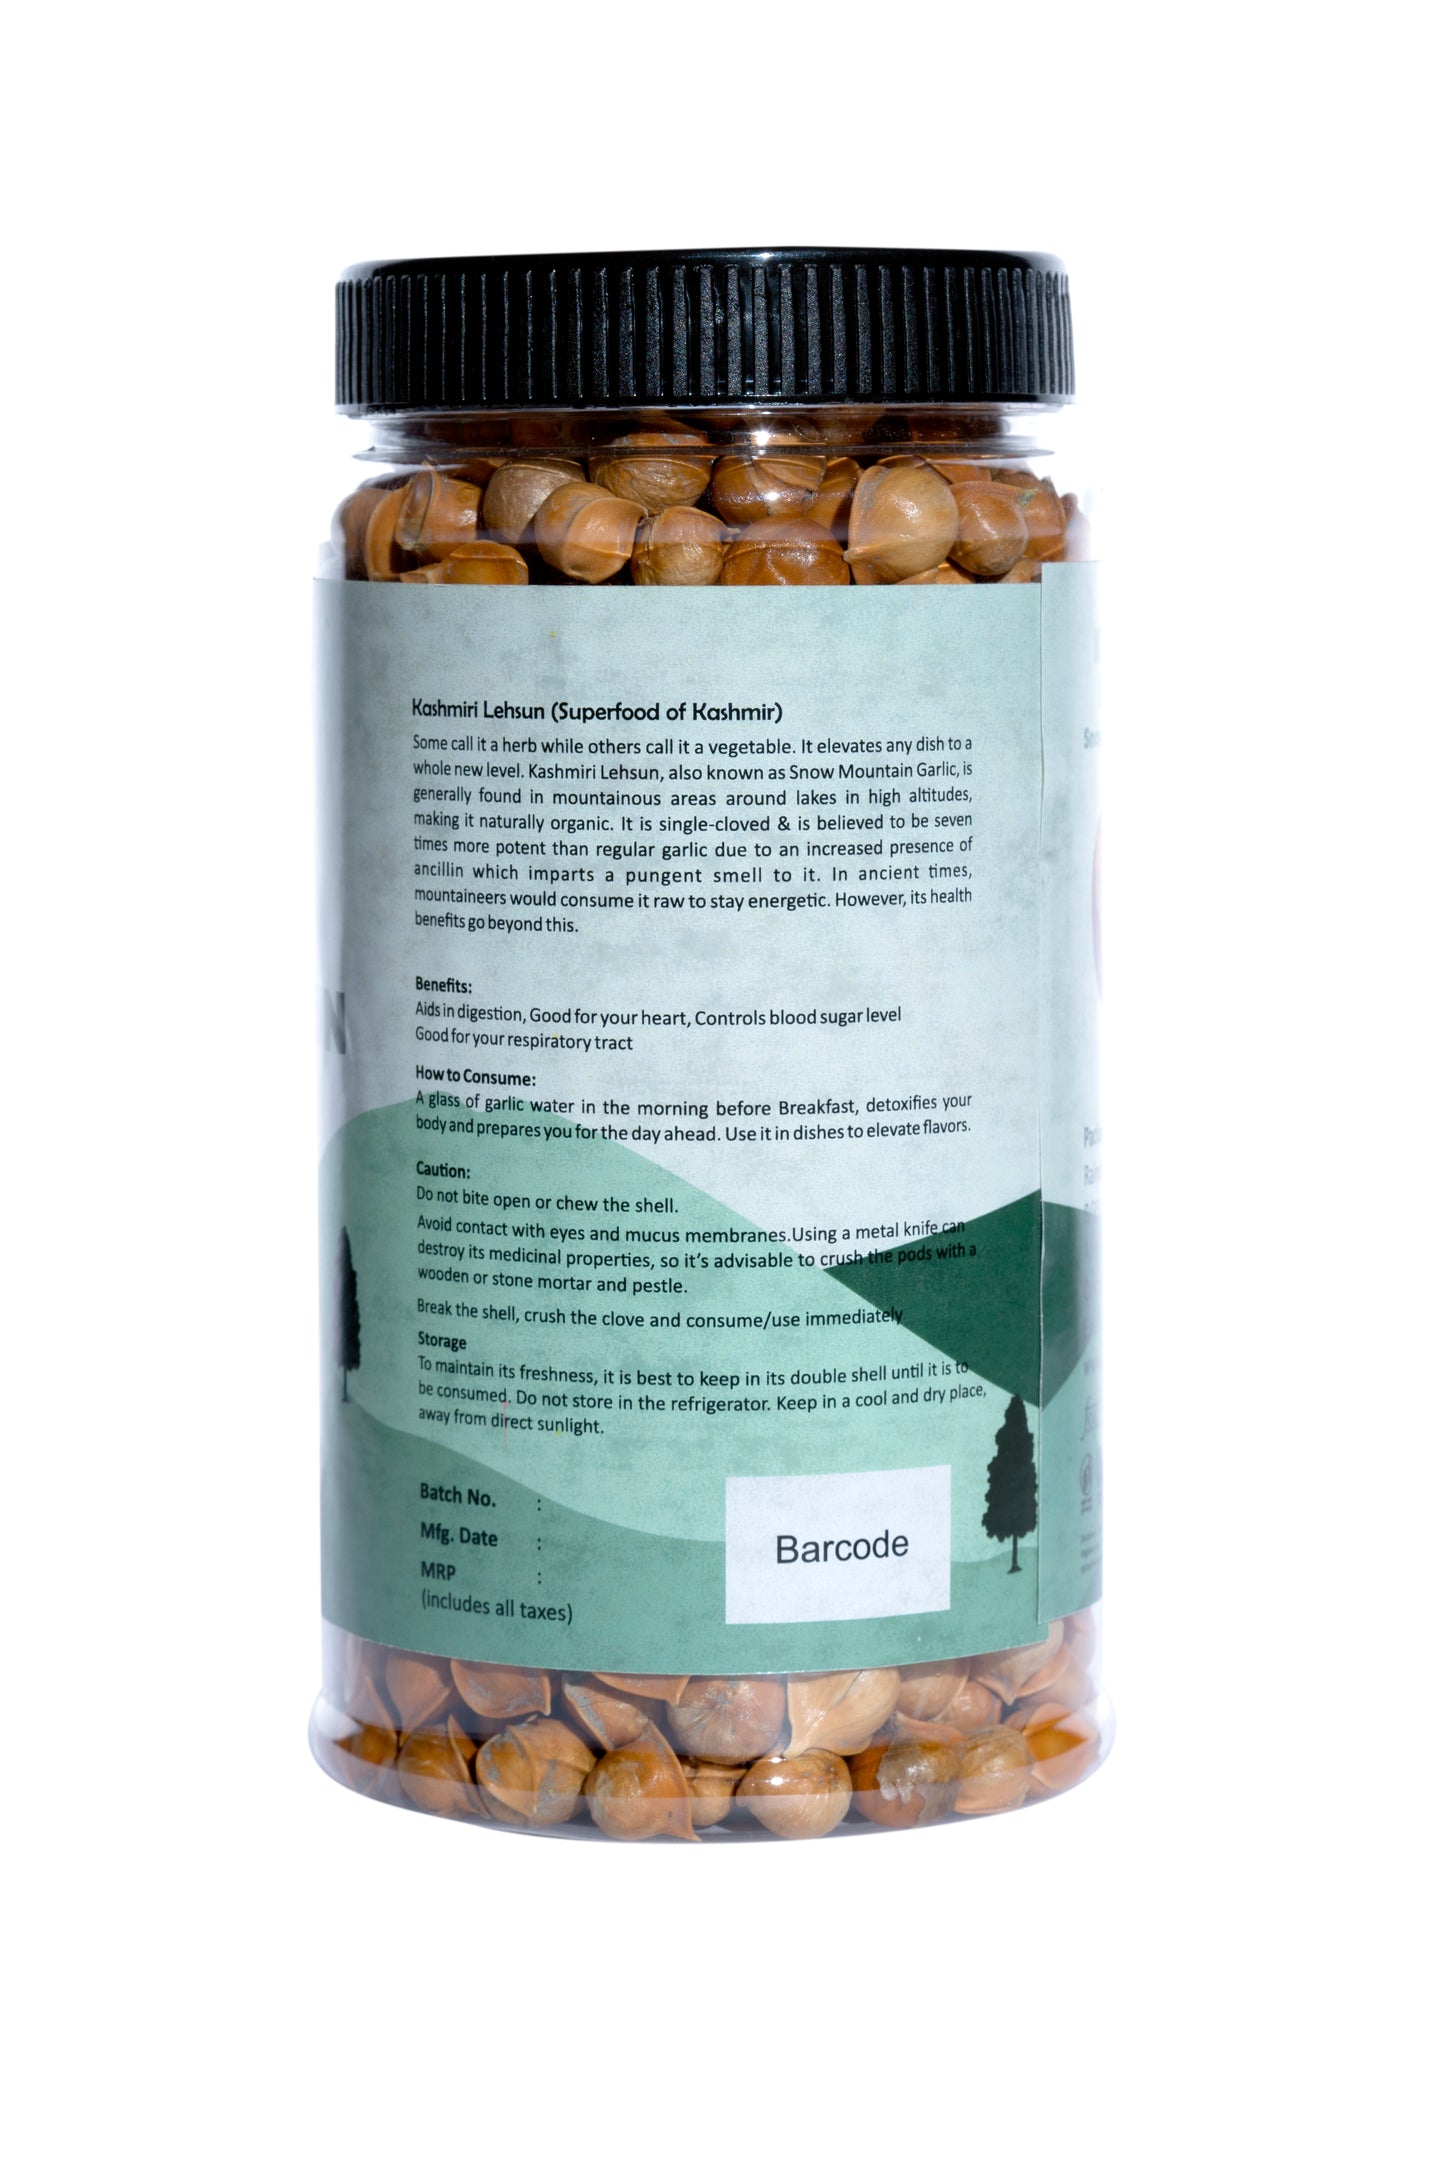 Two & A Bud 100% Pure and Natural  Kashmiri Garlic Lehsun Allium Sativum for strong Immunity & Diabetes